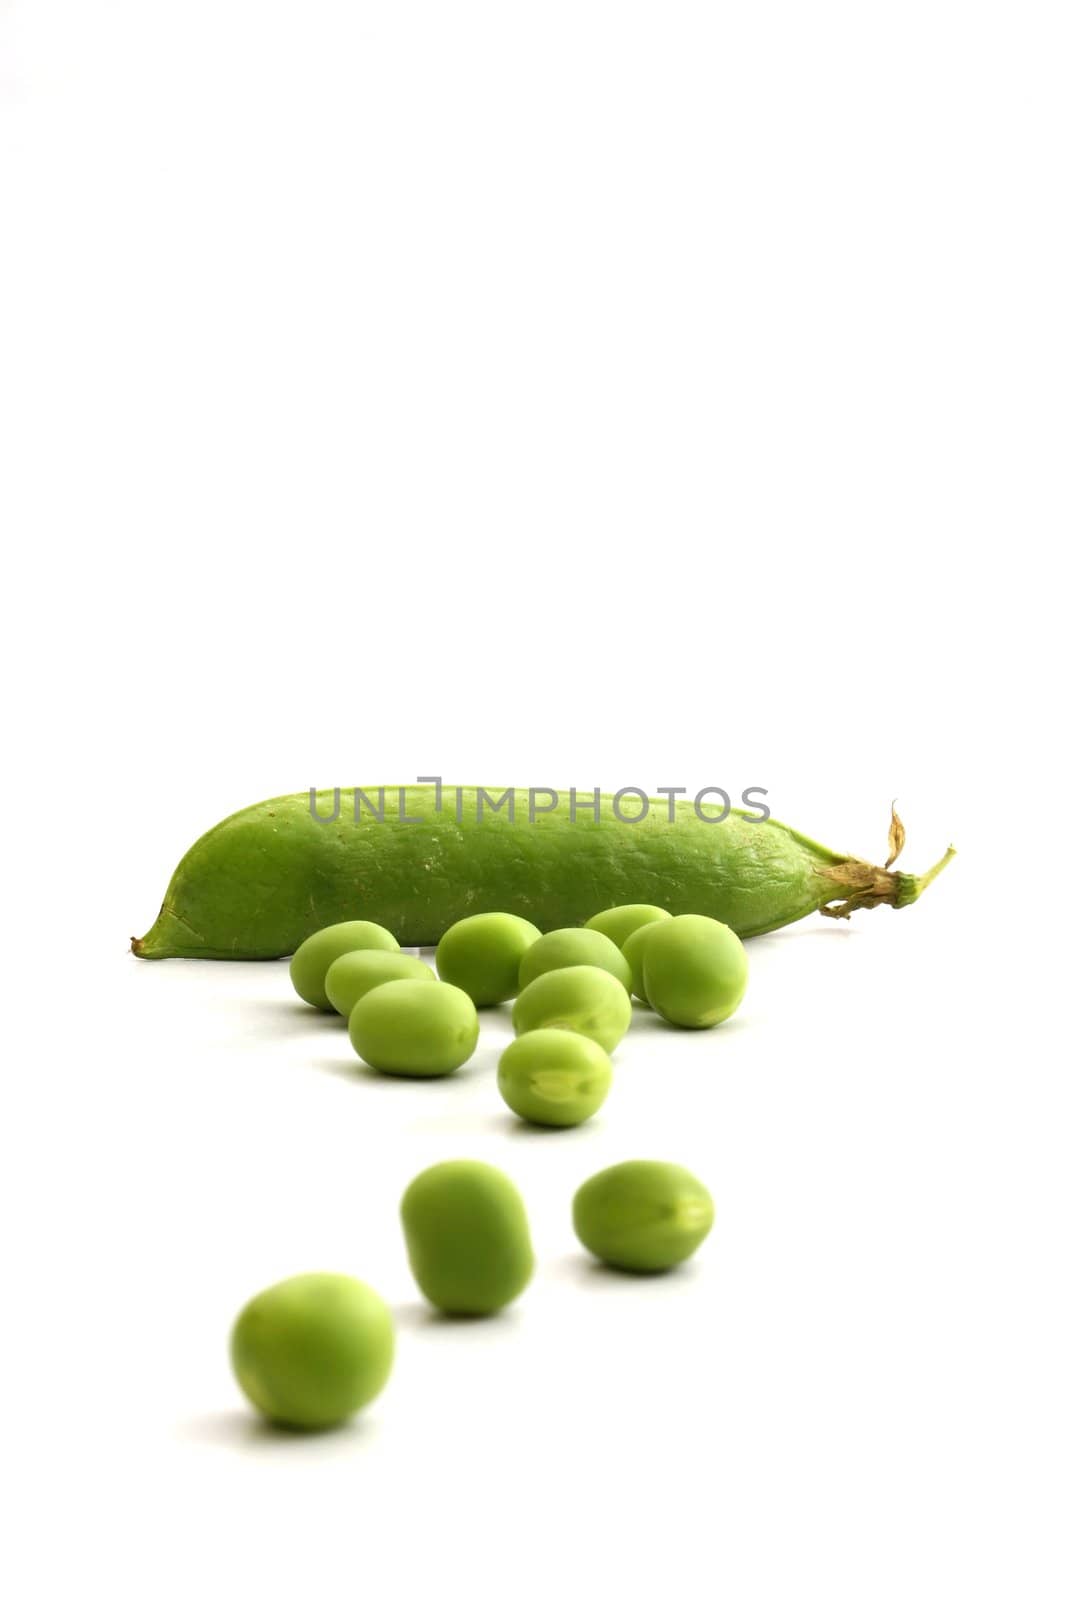 Green peas by pmisak